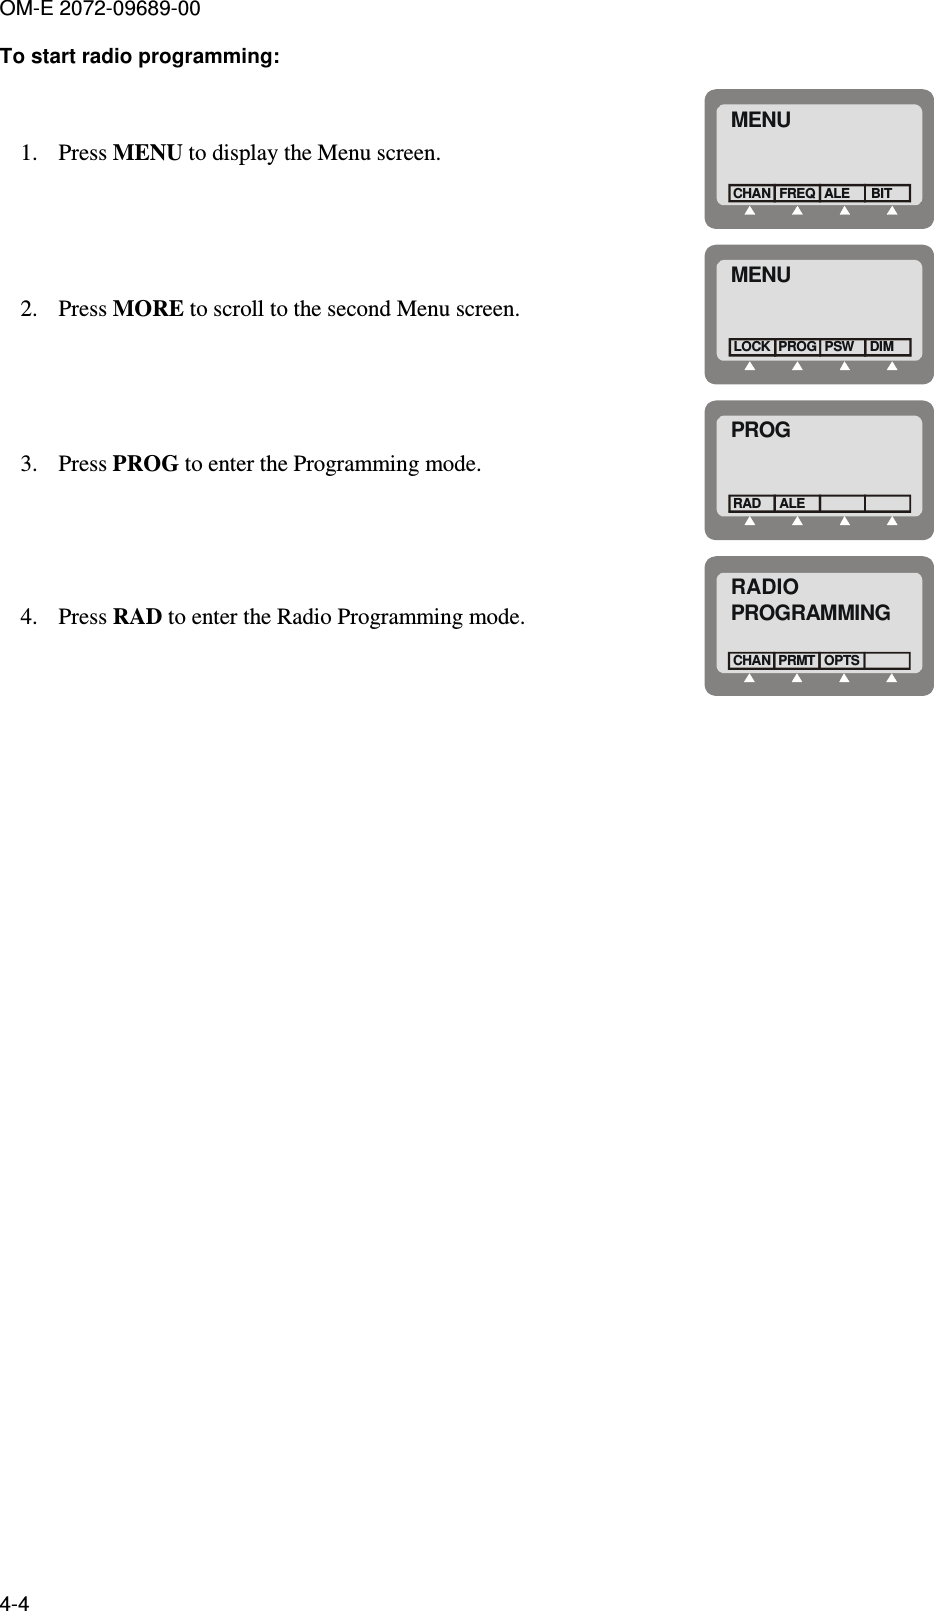 OM-E 2072-09689-00 4-4 To start radio programming:  1. Press MENU to display the Menu screen. MENUFREQCHAN ALEBIT 2. Press MORE to scroll to the second Menu screen. MENUPROGLOCK PSWDIM 3. Press PROG to enter the Programming mode. PROGALERAD 4. Press RAD to enter the Radio Programming mode. RADIOPROGRAMMINGPRMTCHANOPTS  